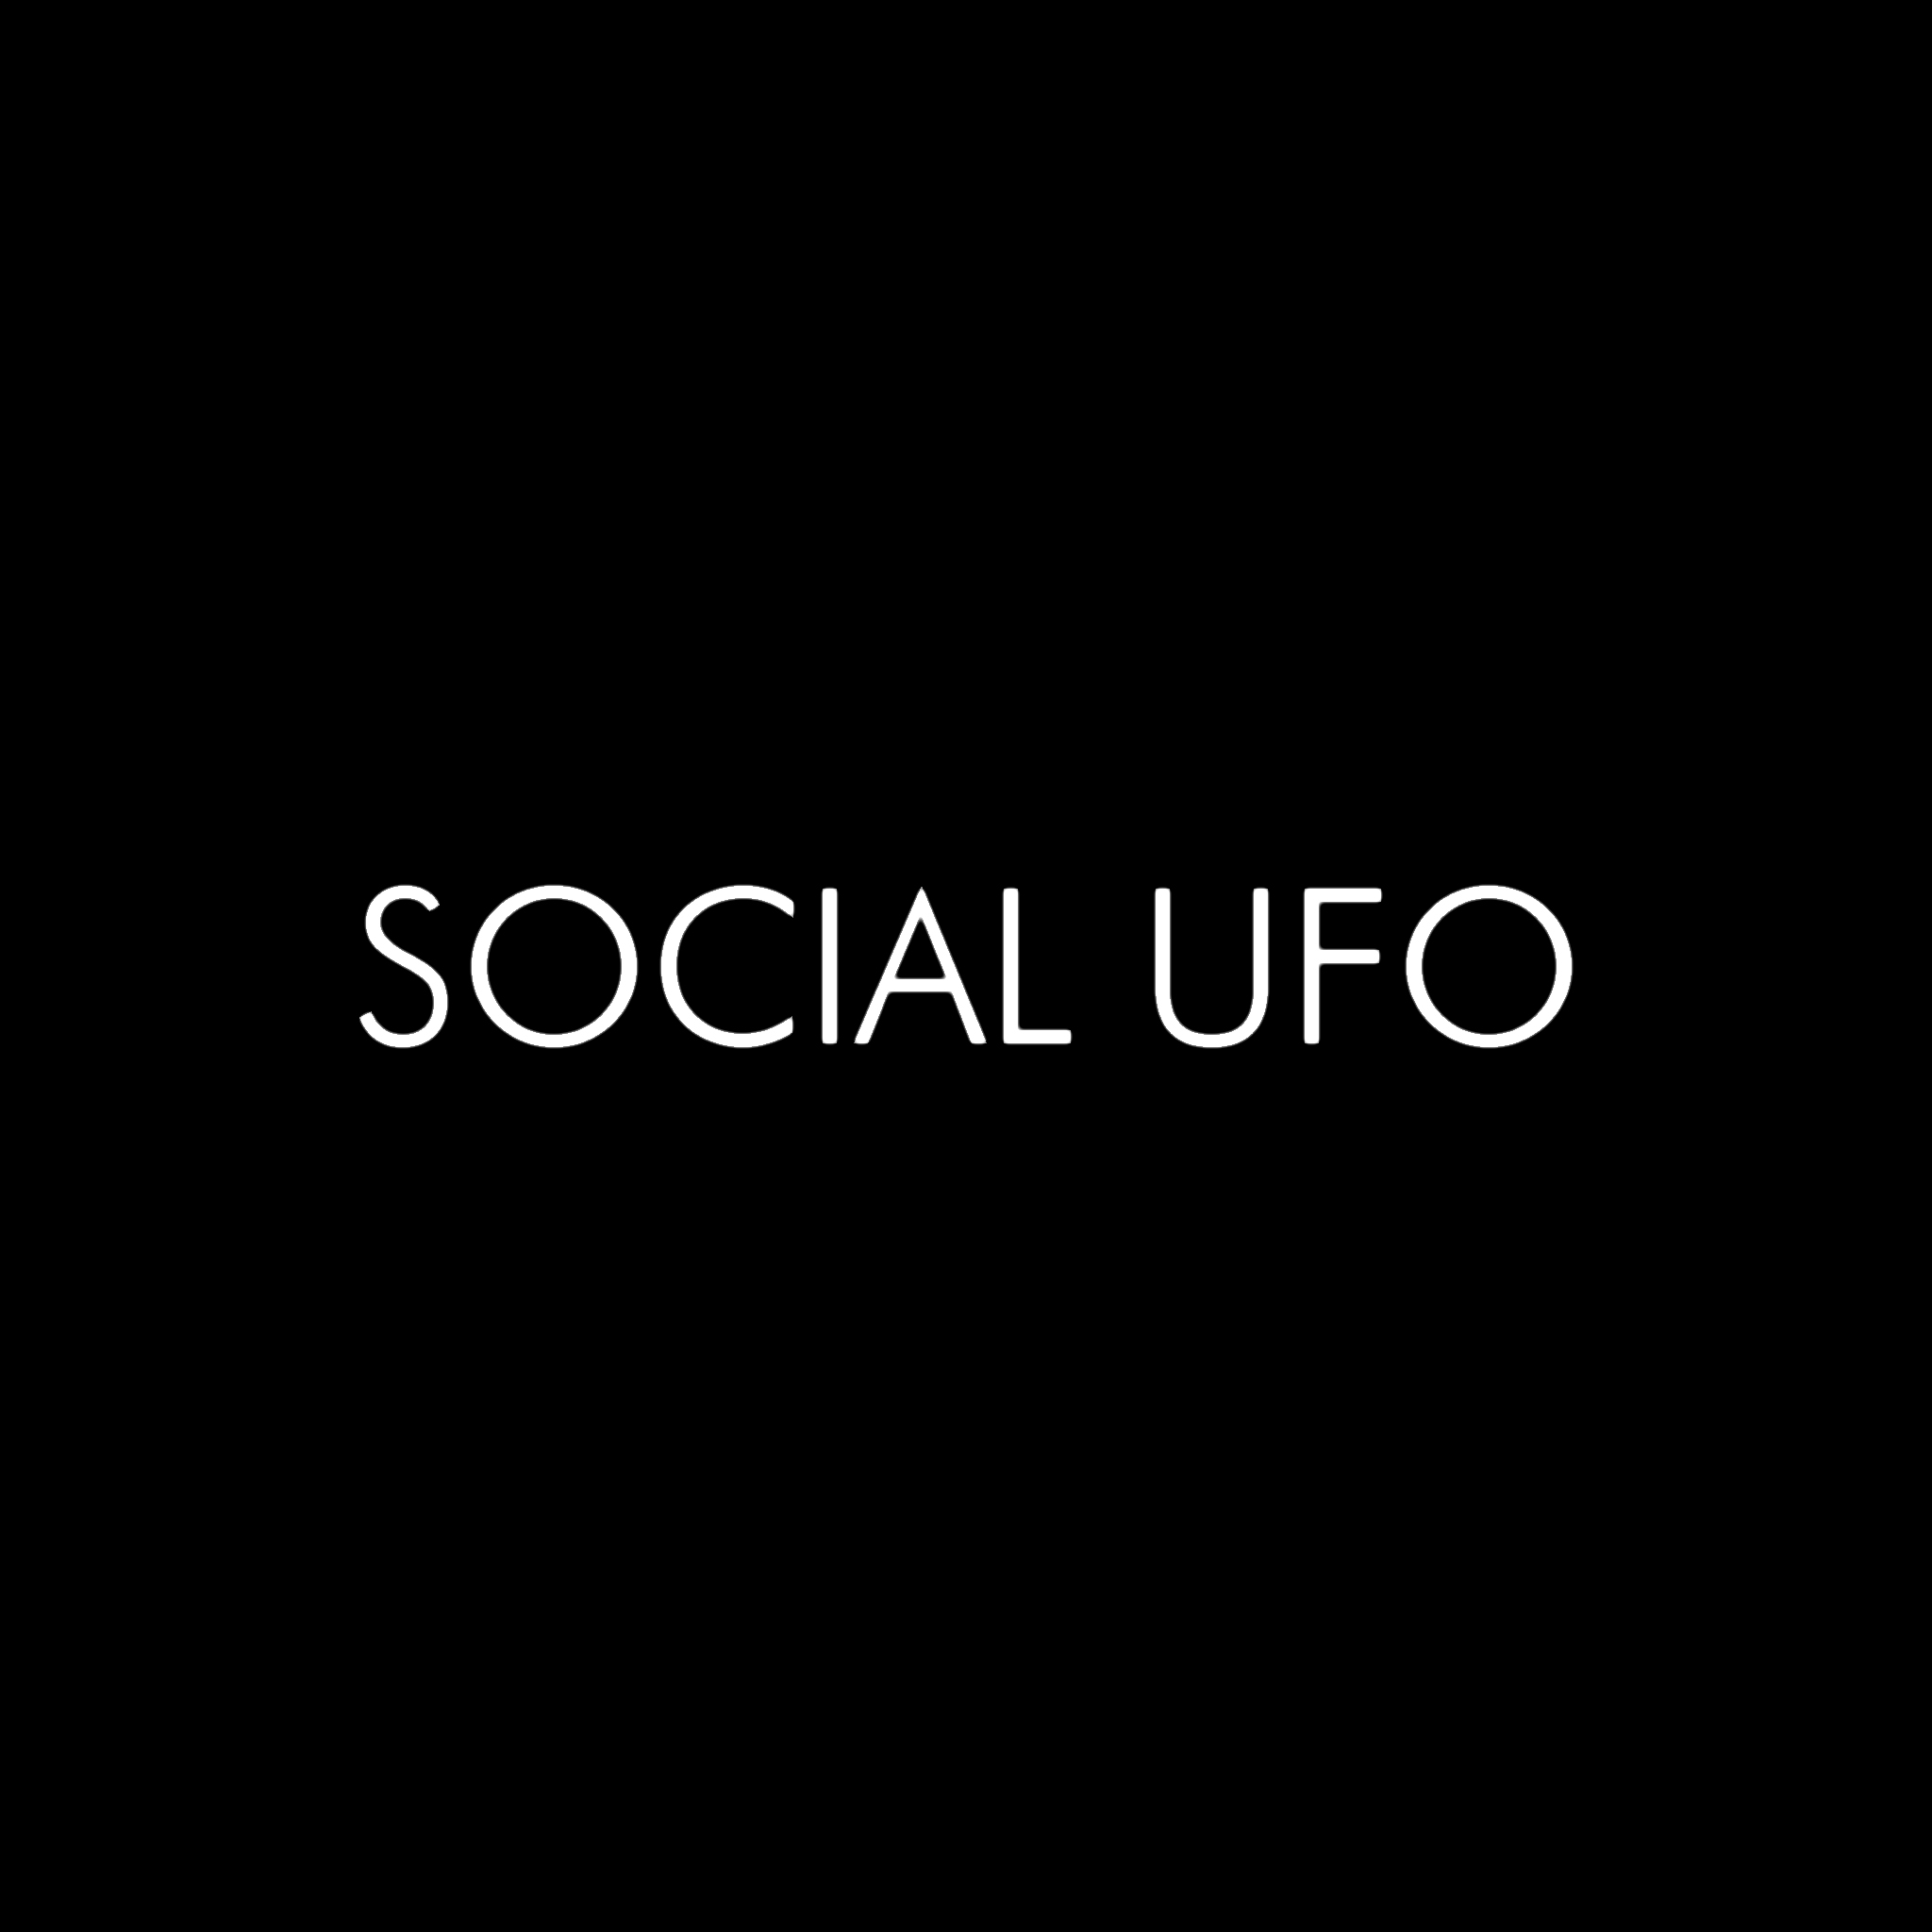 SOCIAL UFO